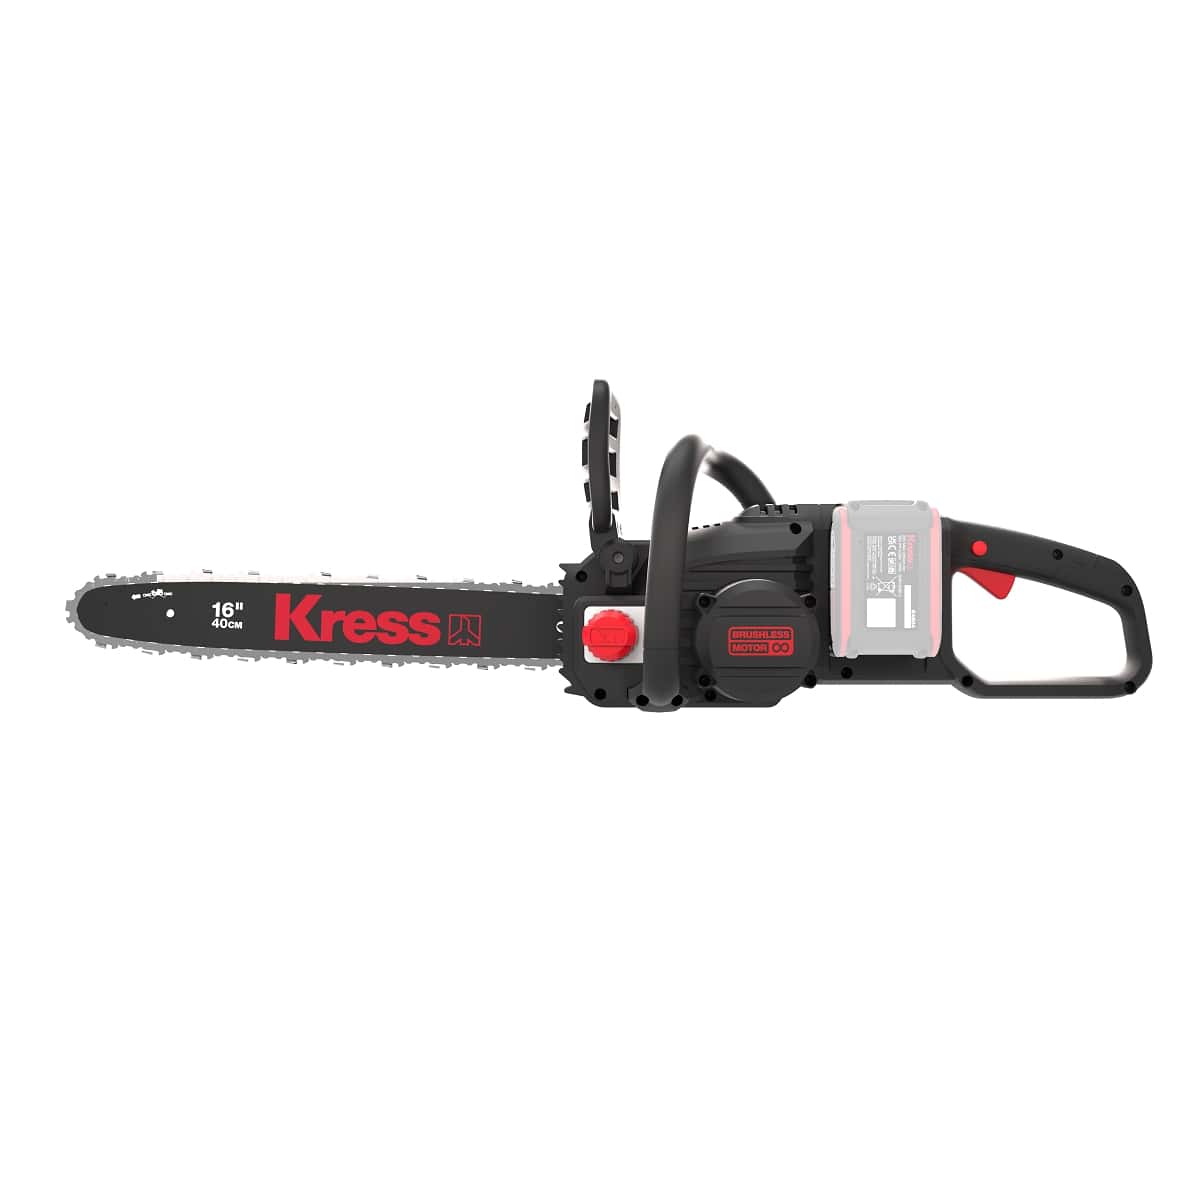 Kress KG347E 2x20V Pro Chainsaw, 40cm + 2x Batteries & Twin Charger